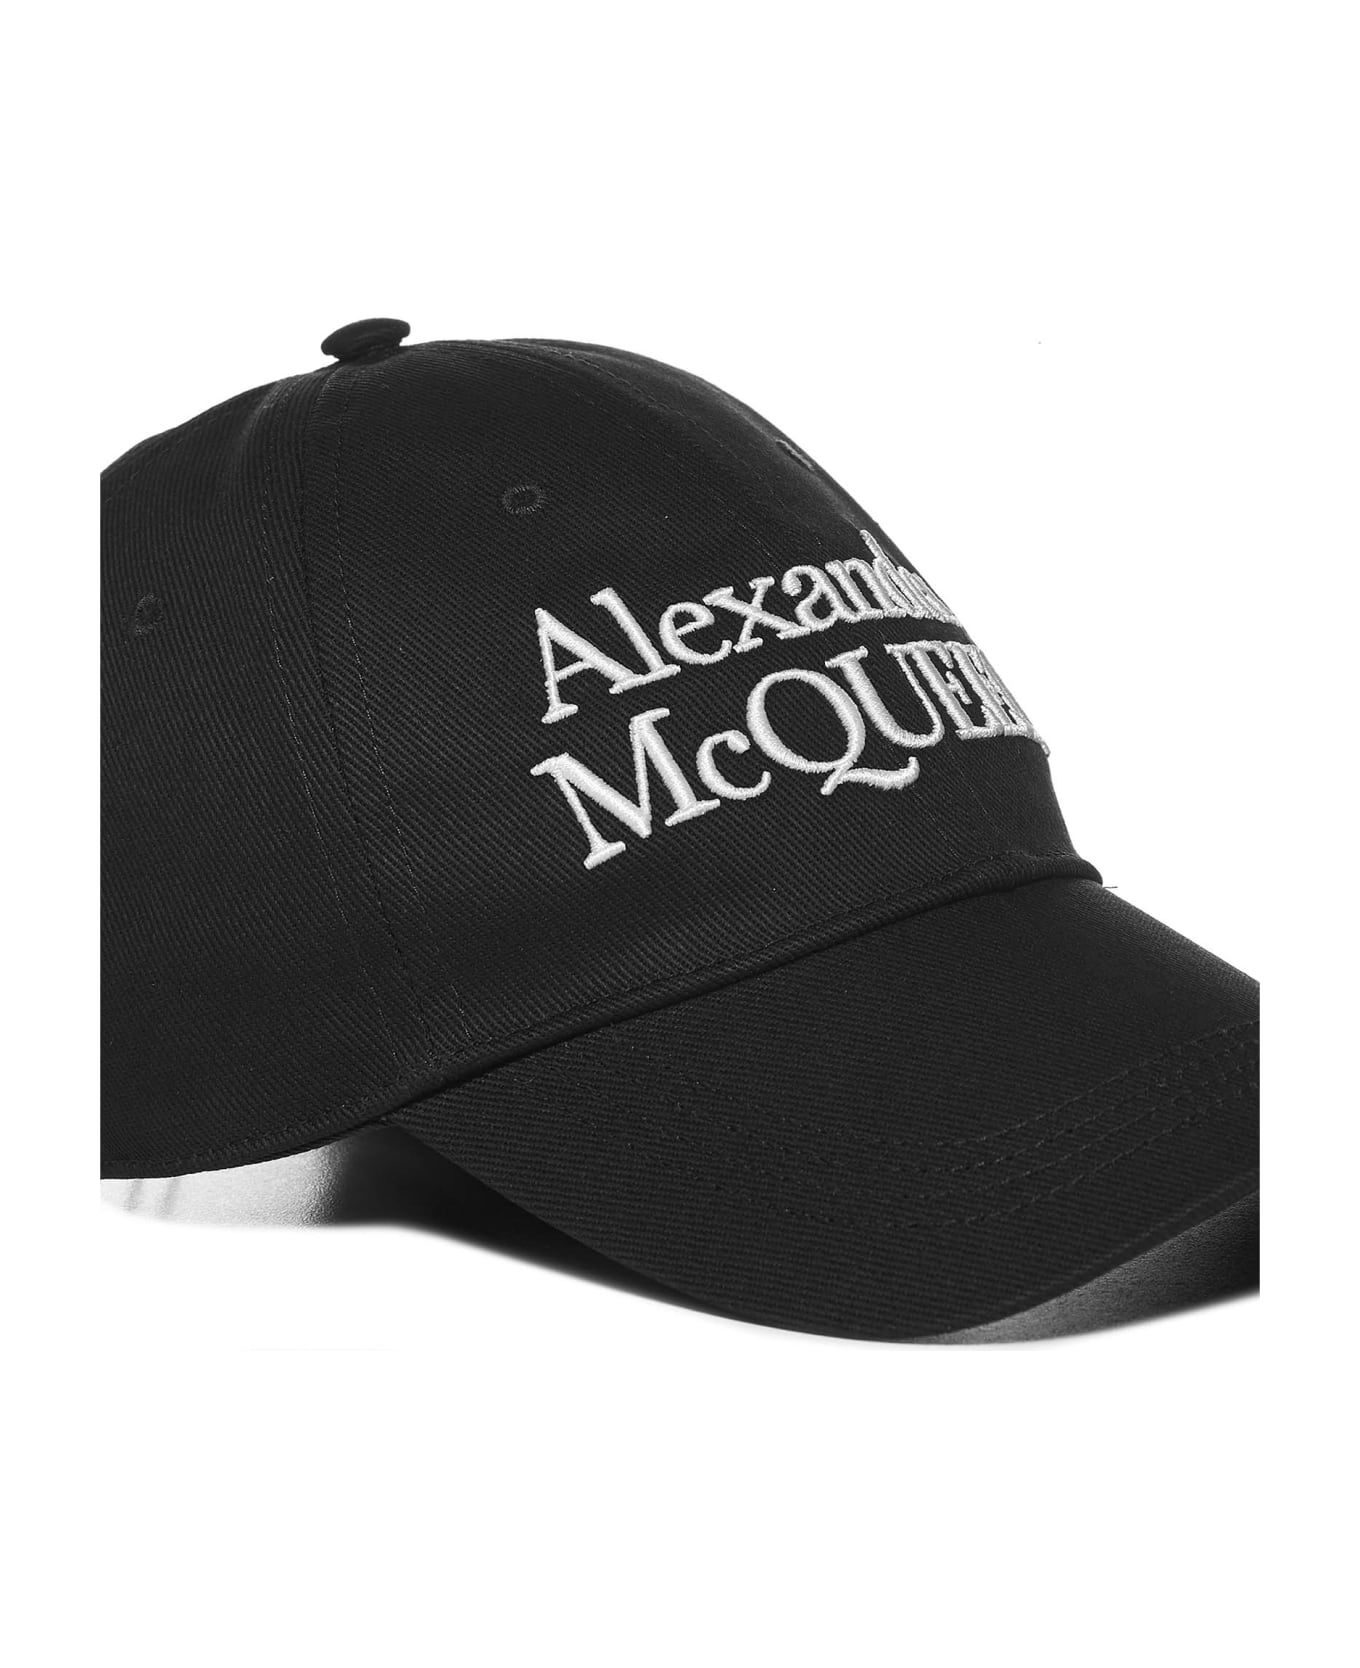 Alexander McQueen Stacked Hat - Black/ivory